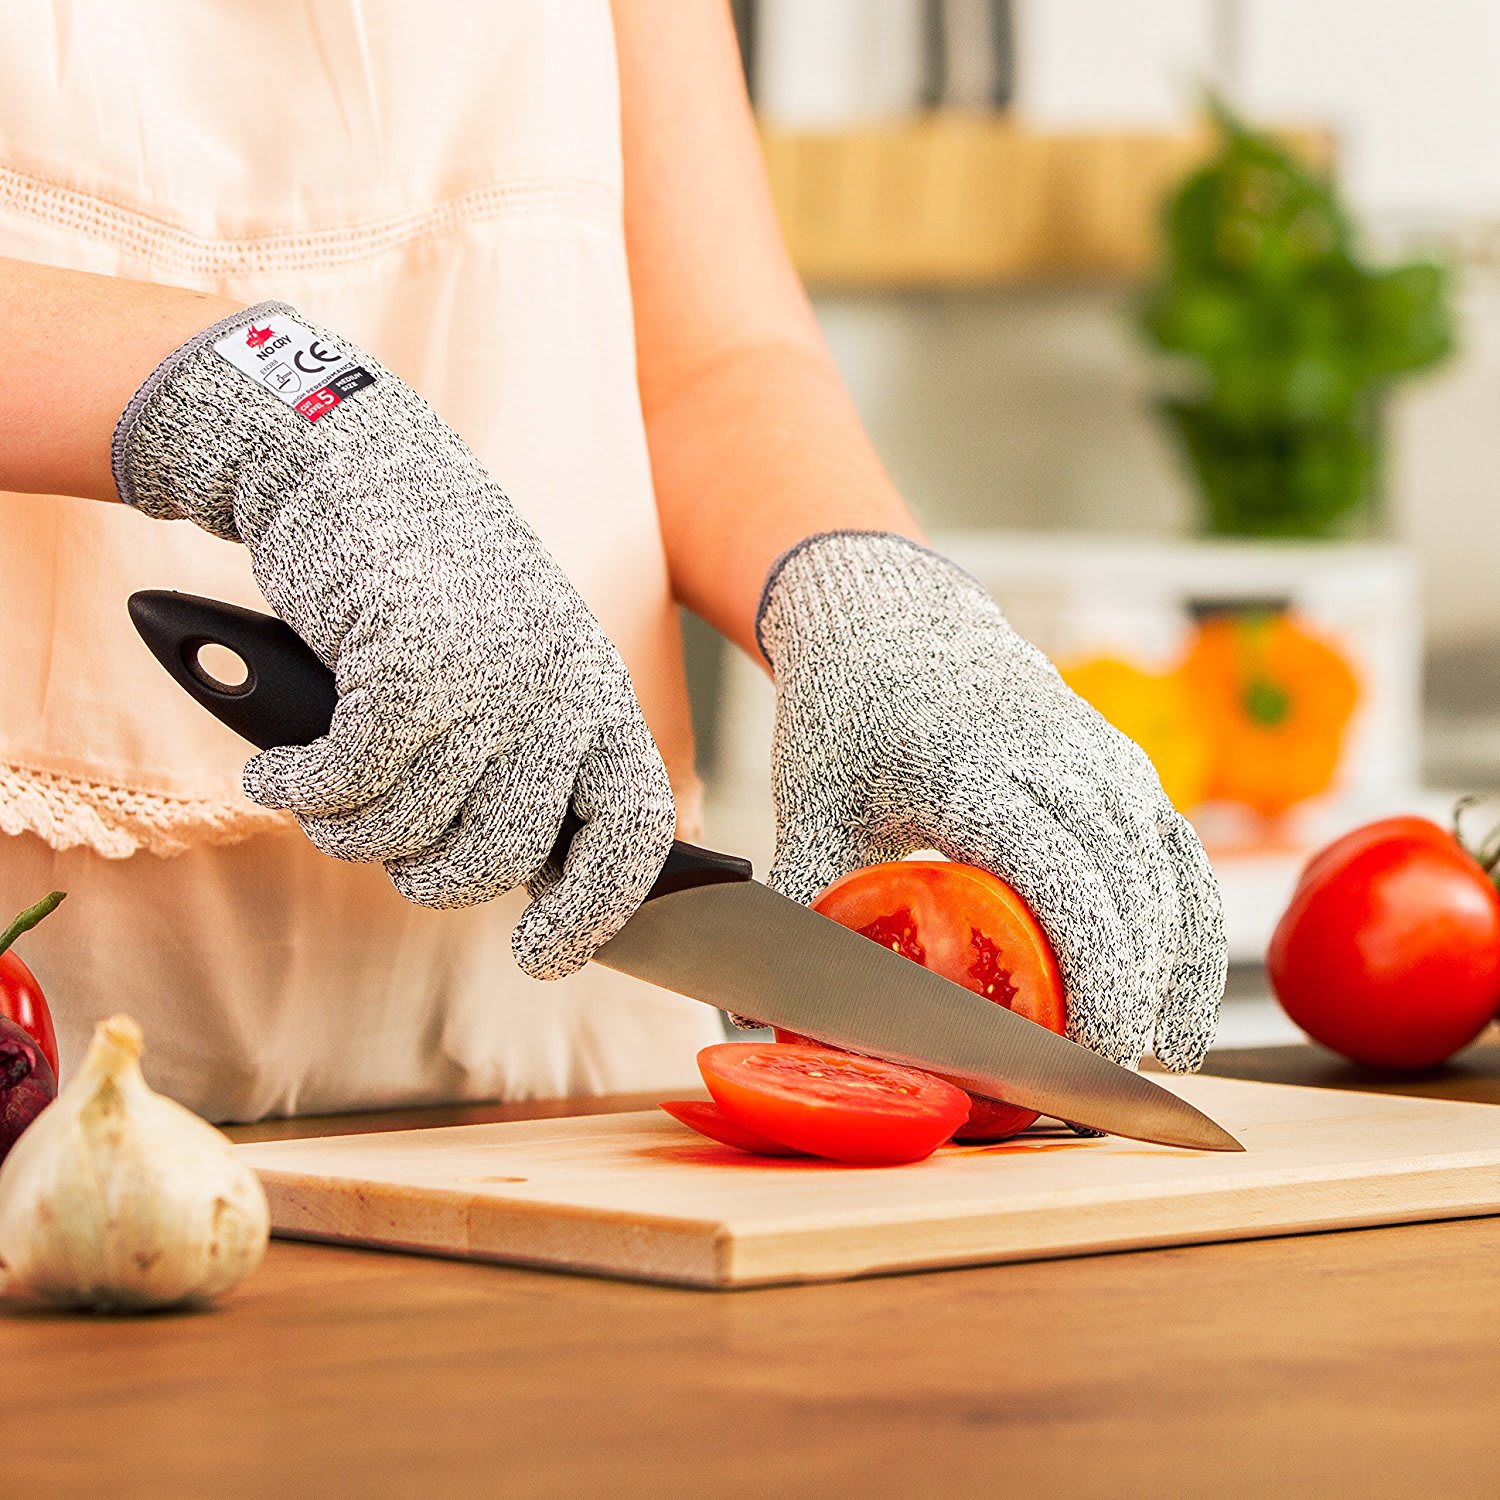 8 best kitchen gadgets to make cooking safer